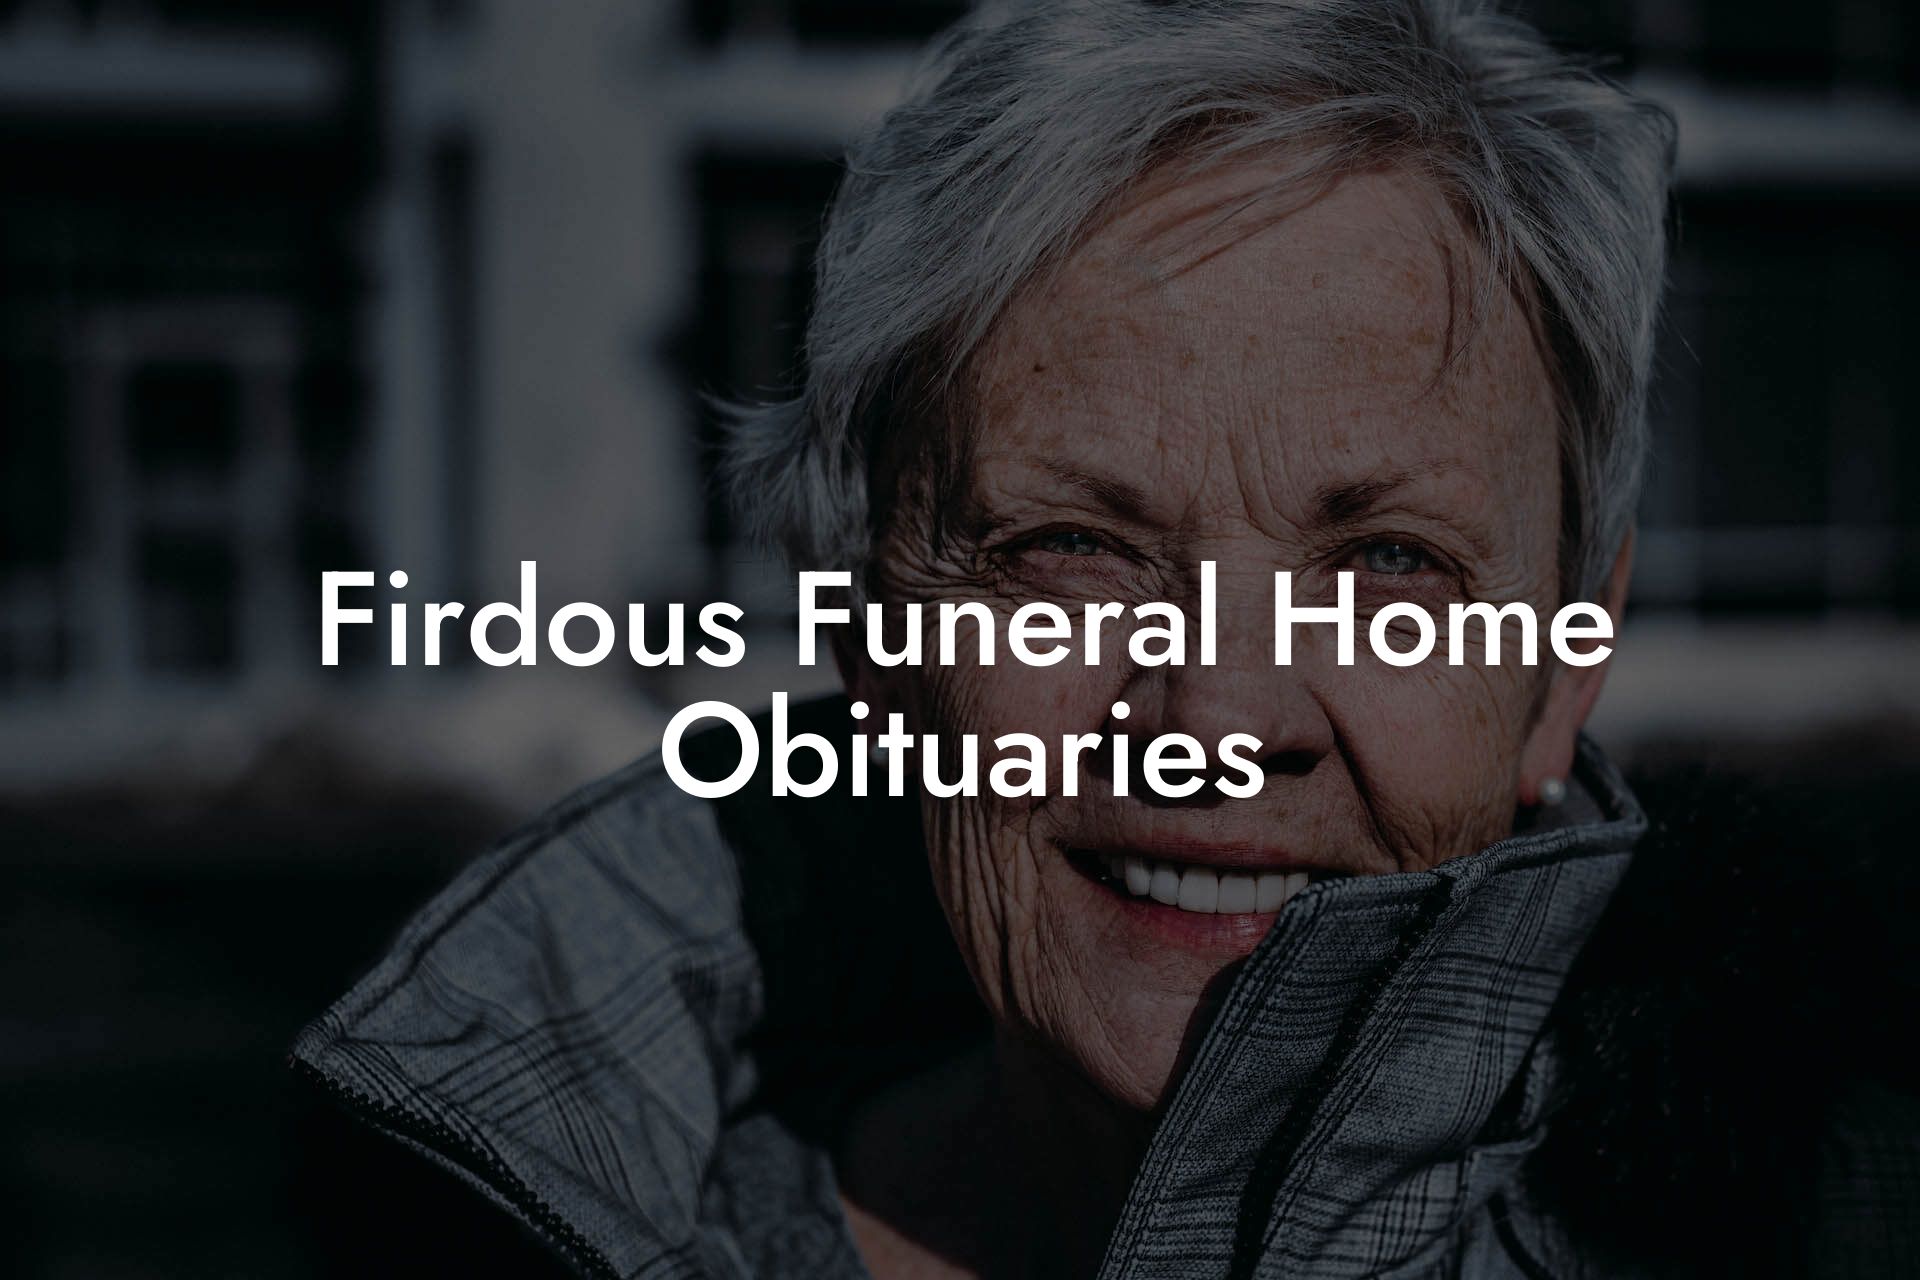 Firdous Funeral Home Obituaries